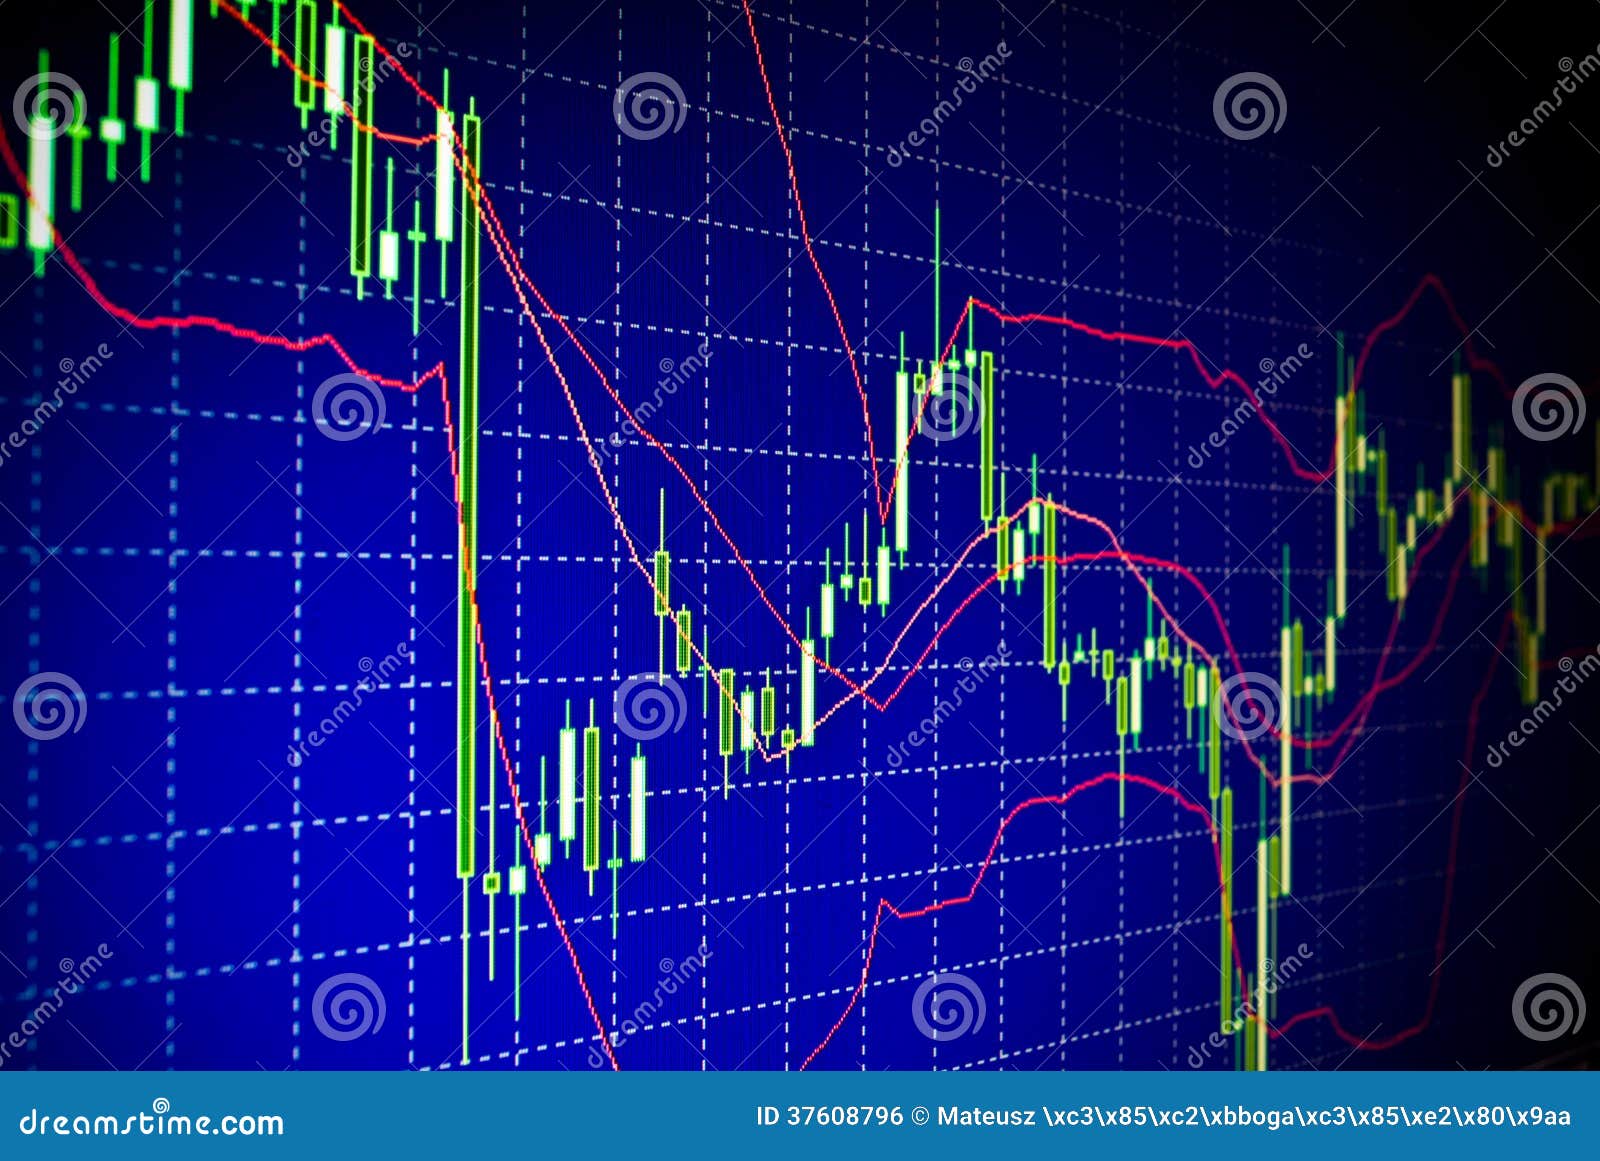 Market Forex Market Forex Stock Market Candle